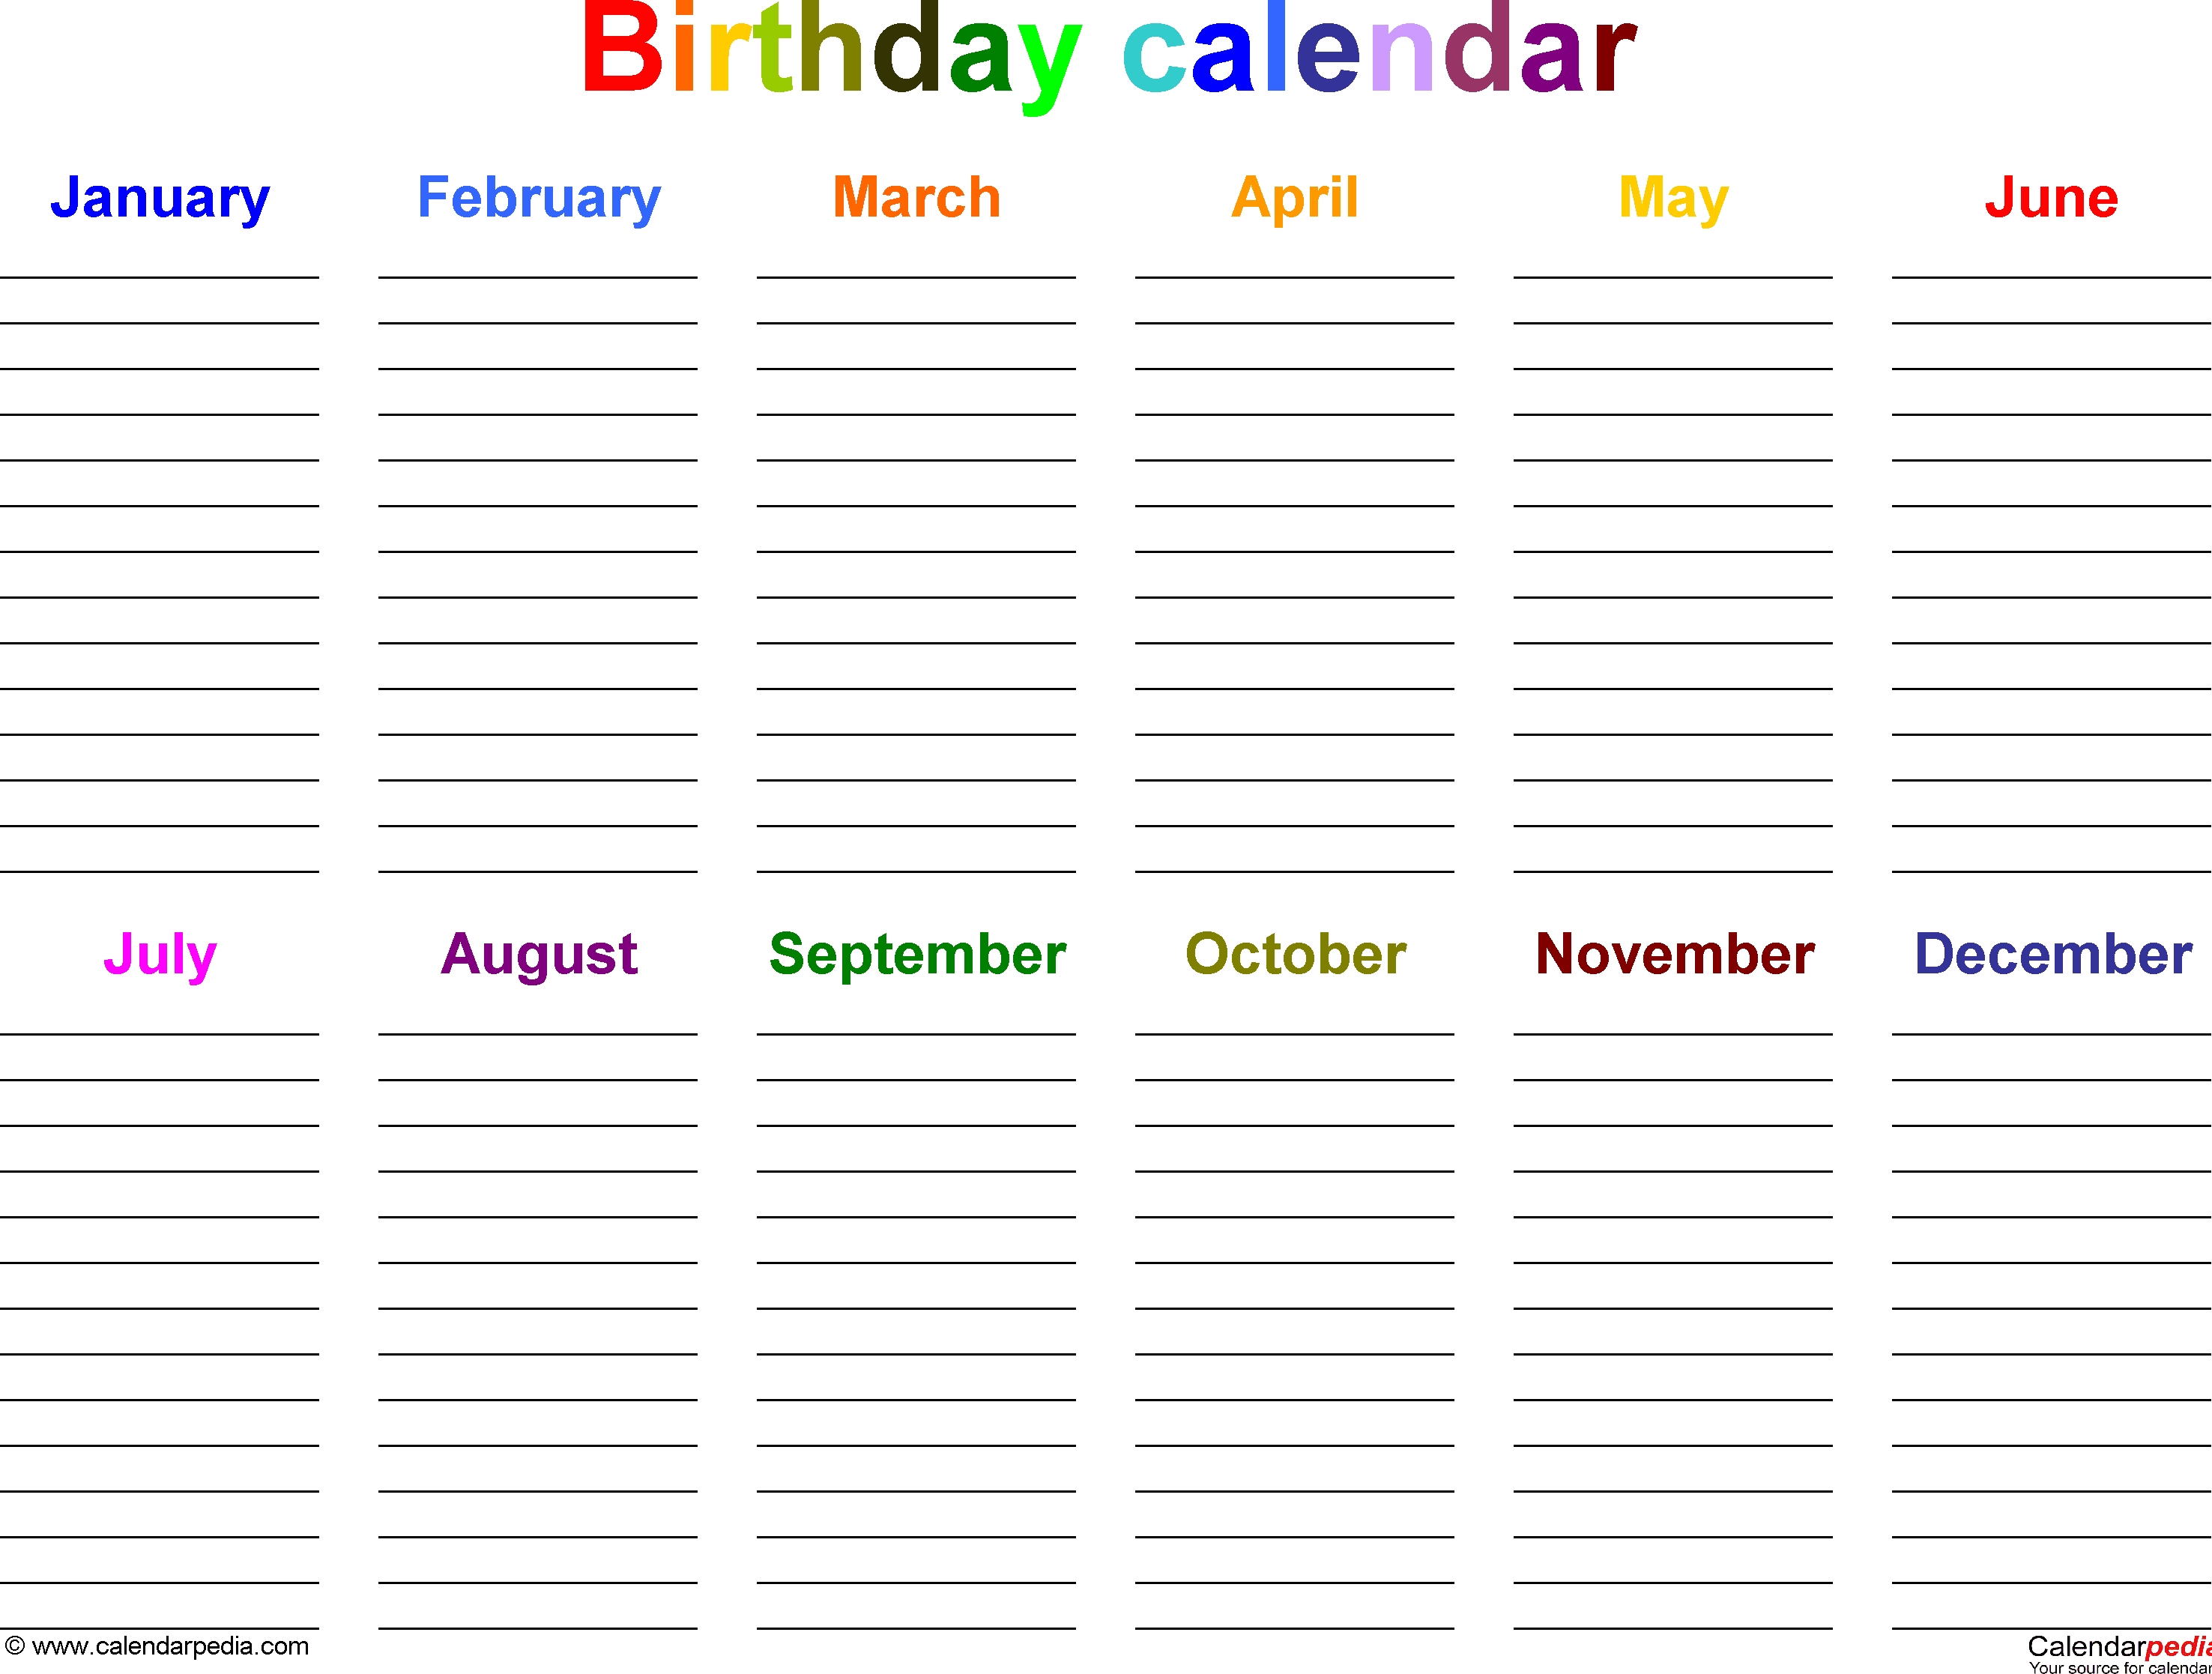 Birthday Calendars Printable